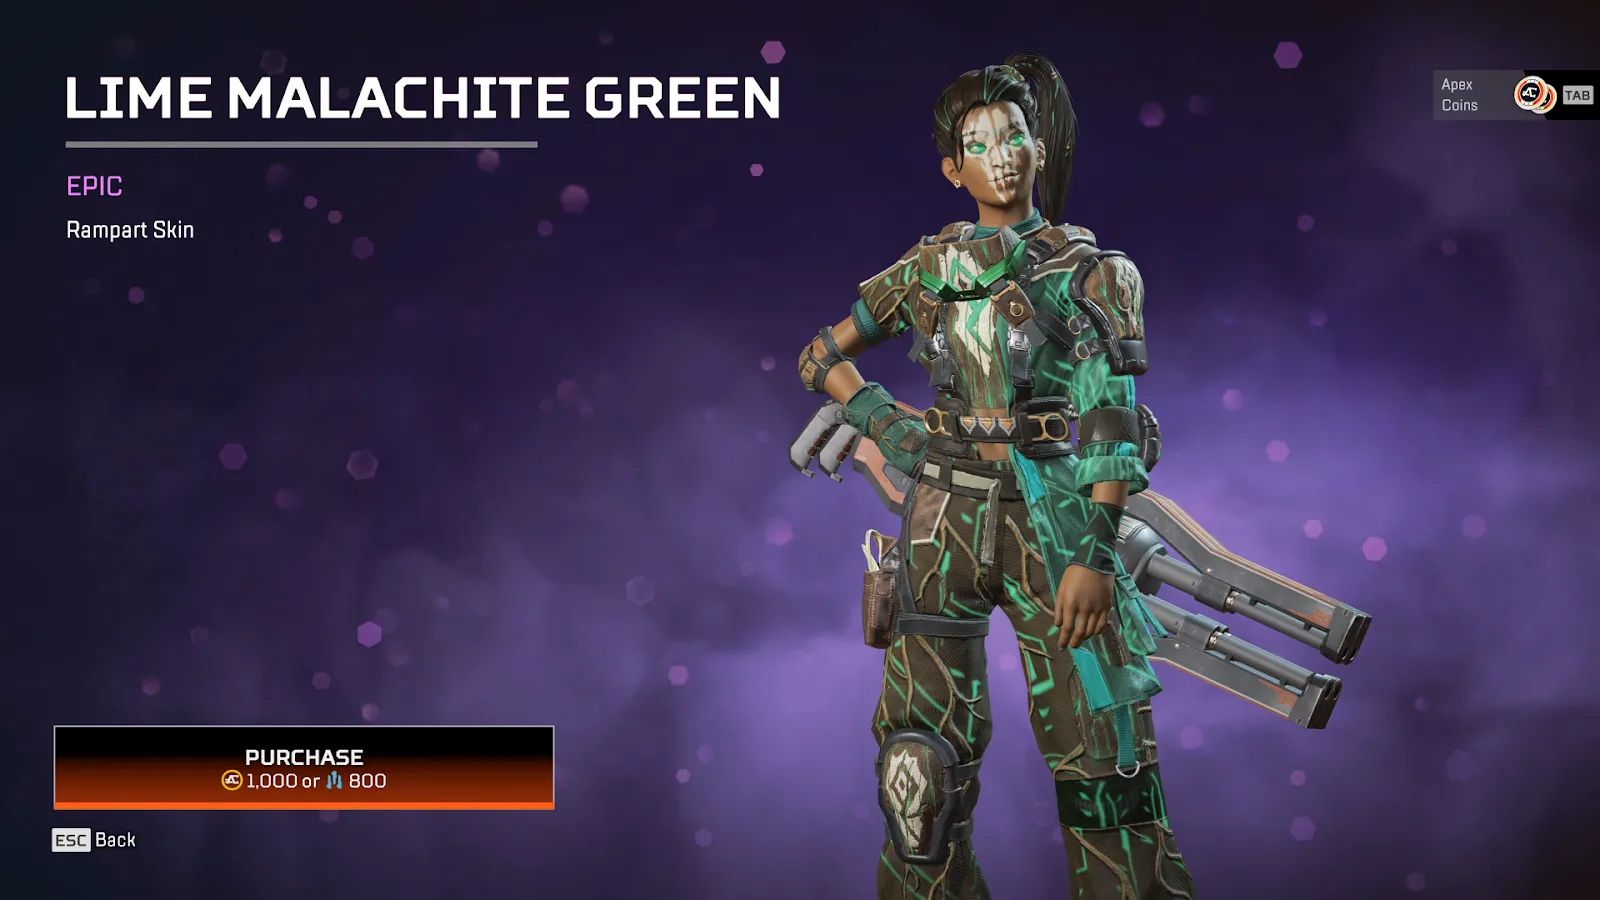 The Lime Malachite Green skin in Apex Legends